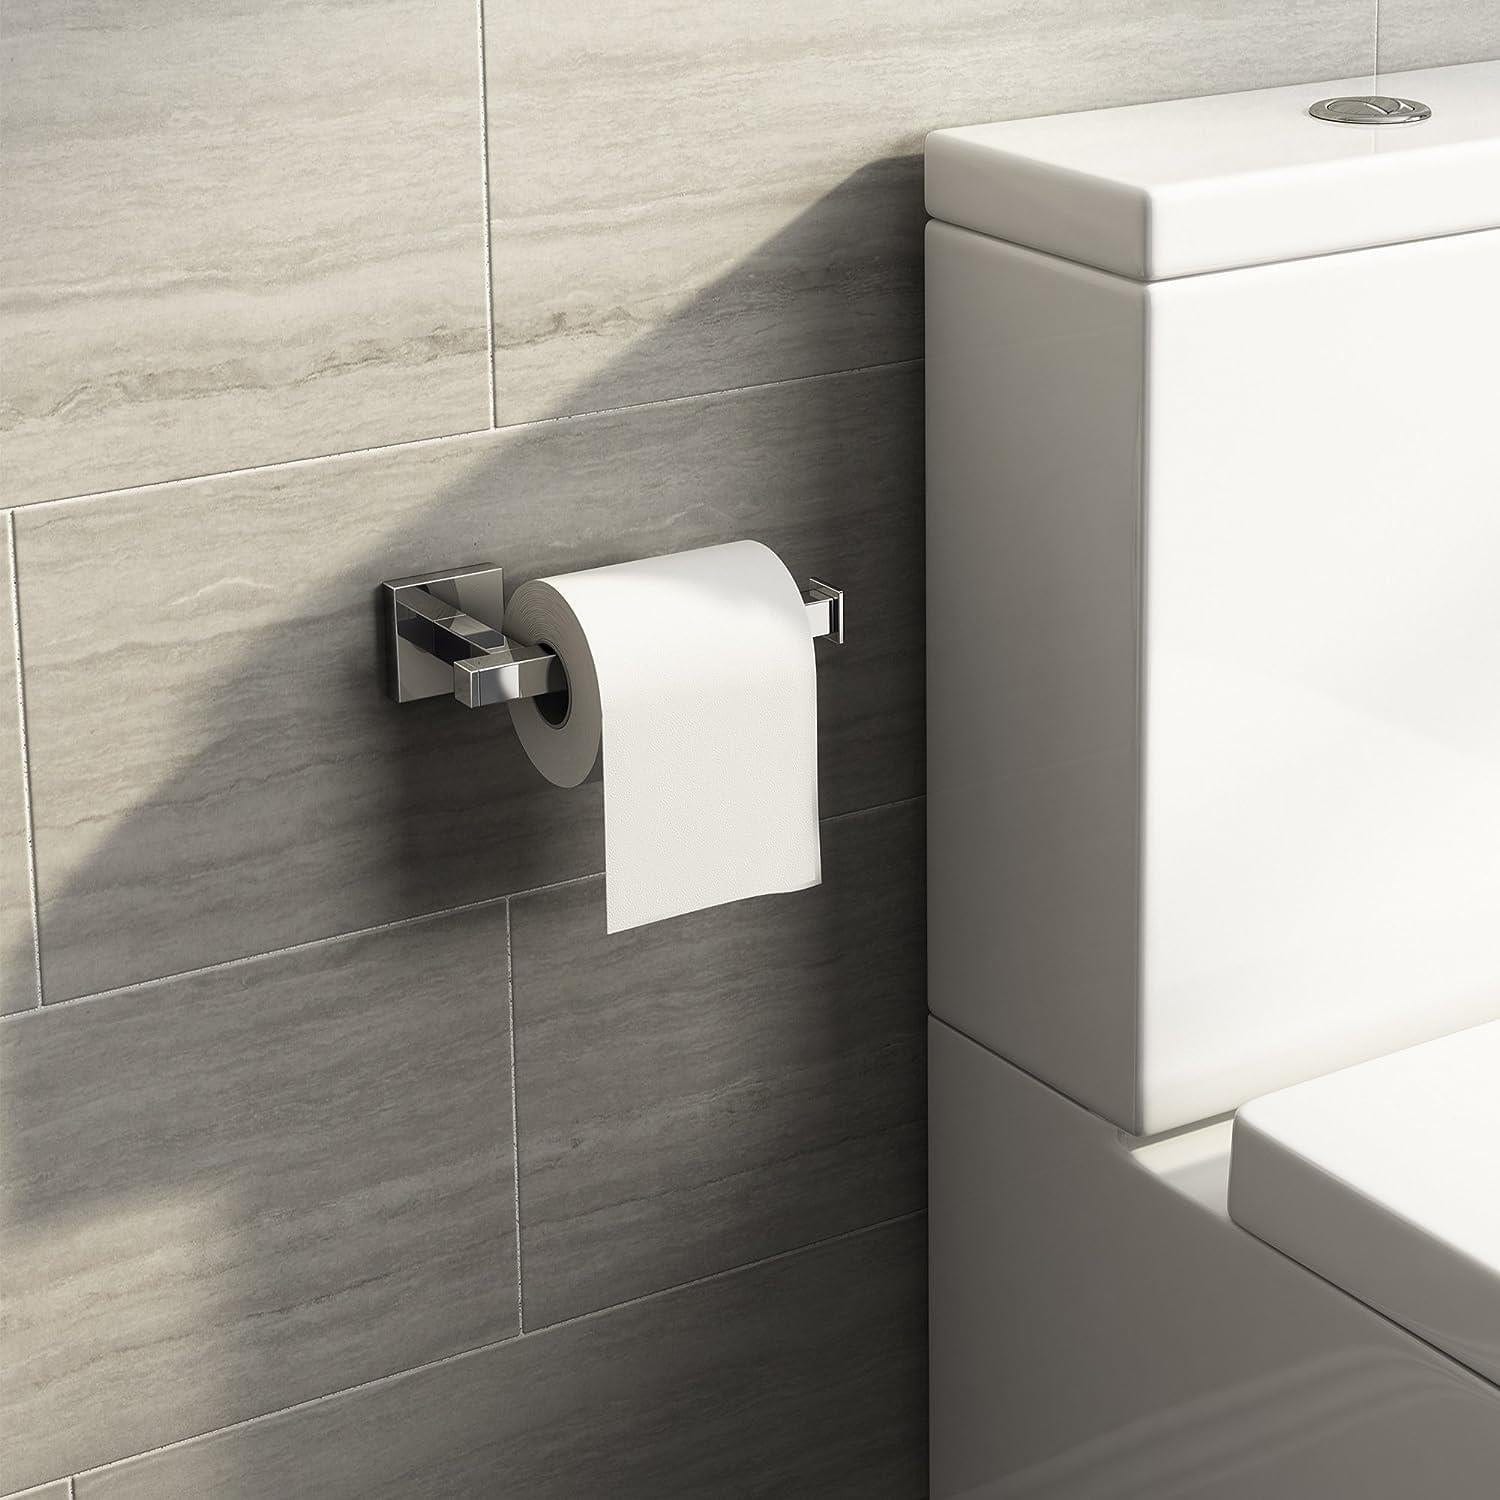 iBathUK Bathroom > Bathroom Accessories iBathUK Modern Toilet Roll Holder Chrome Wall Mounted Square